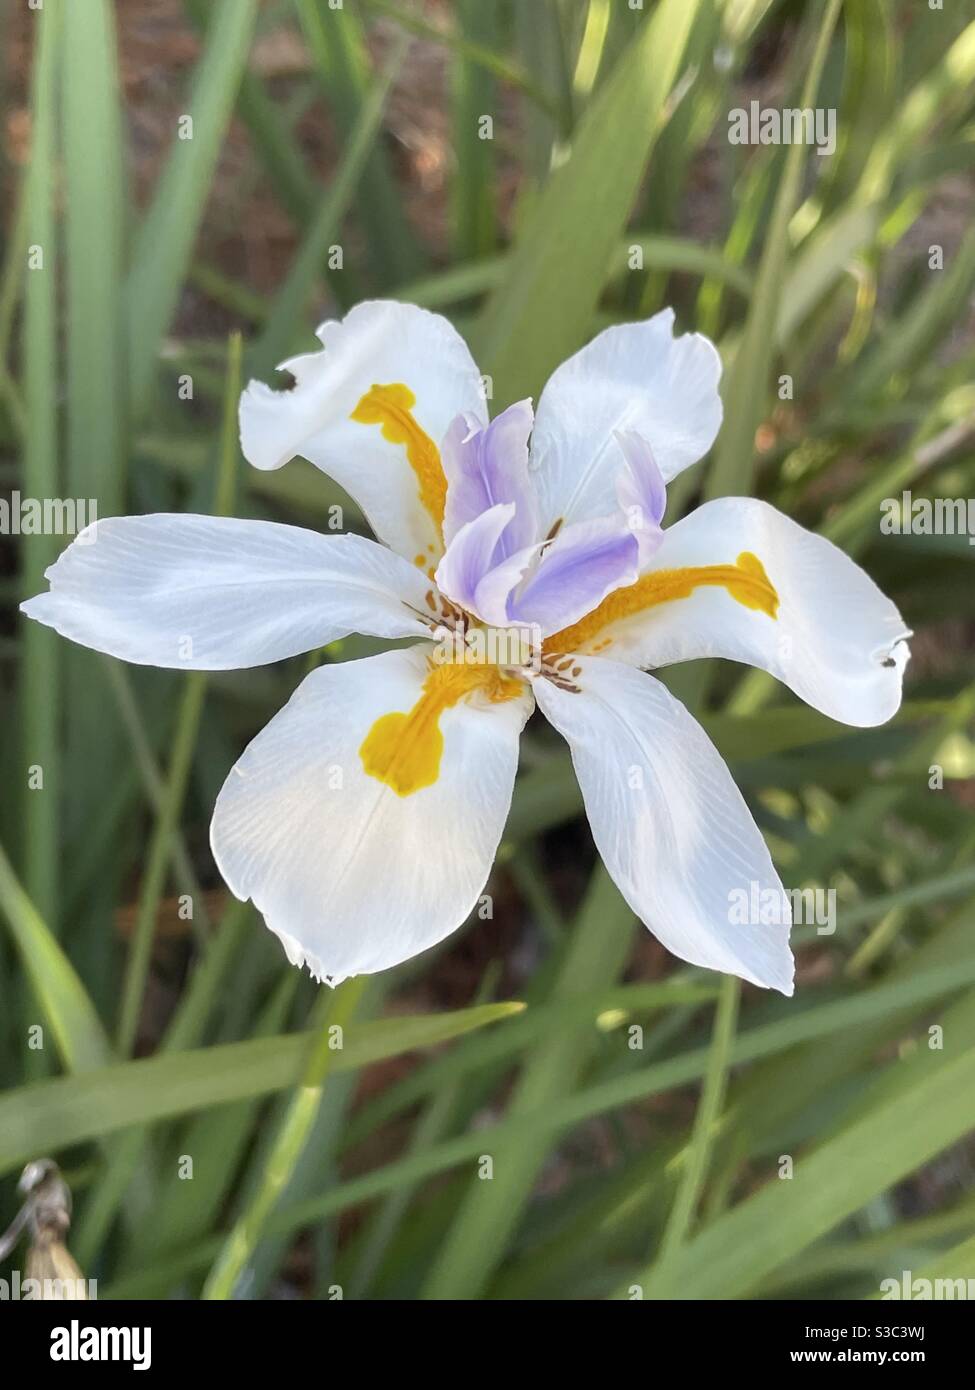 Iris blanco africano fotografías e imágenes de alta resolución - Alamy